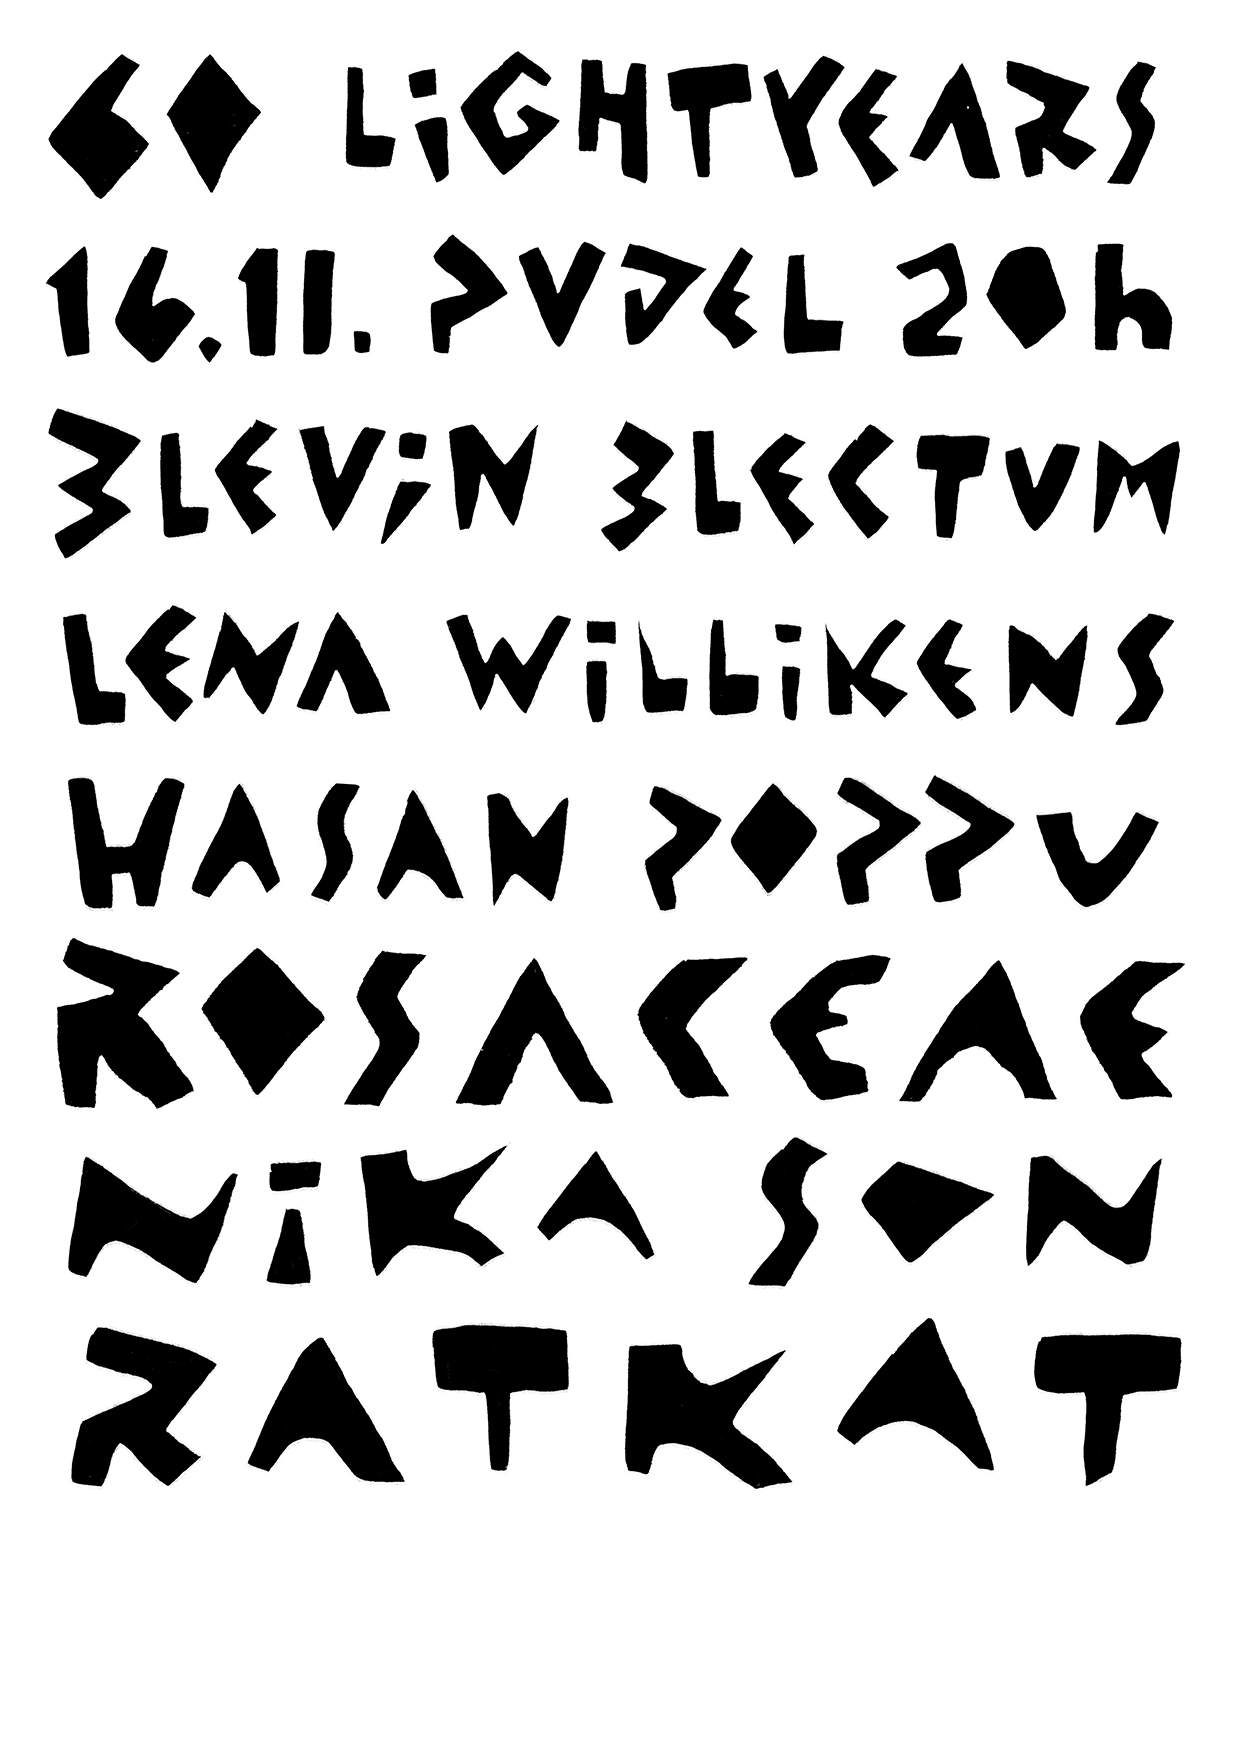 60 Lightyears with Lena Willikens, Blevin Blectum, Rosaceae, Hasan Poppu, Nika Son, Ratkat - Página trasera